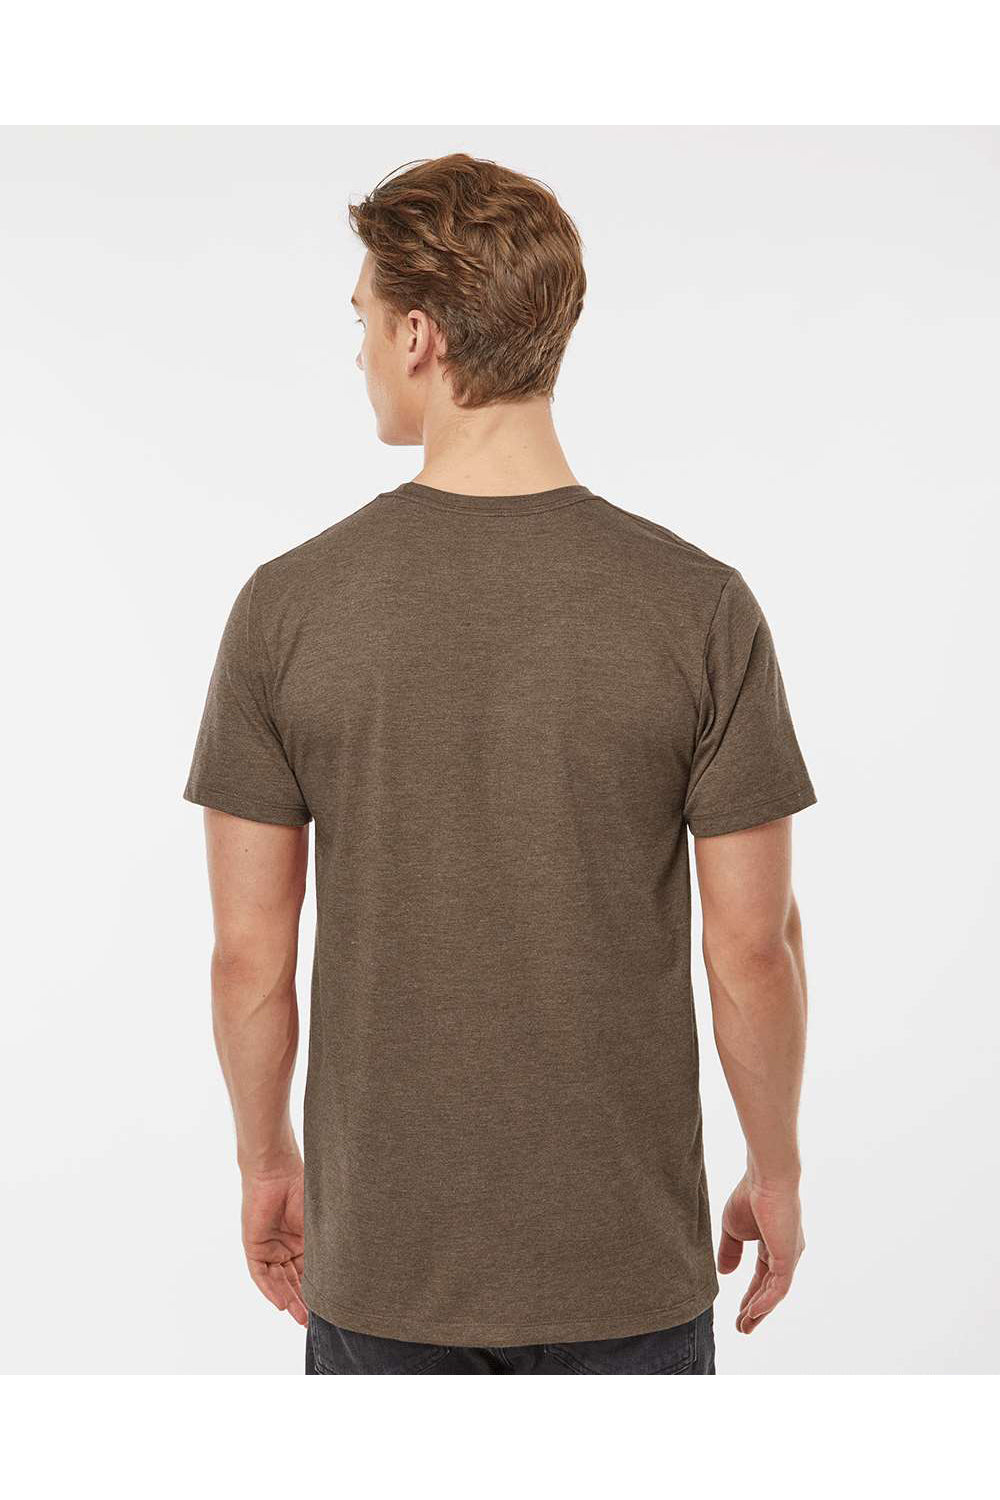 Tultex 541 Mens Premium Short Sleeve Crewneck T-Shirt Heather Brown Model Back